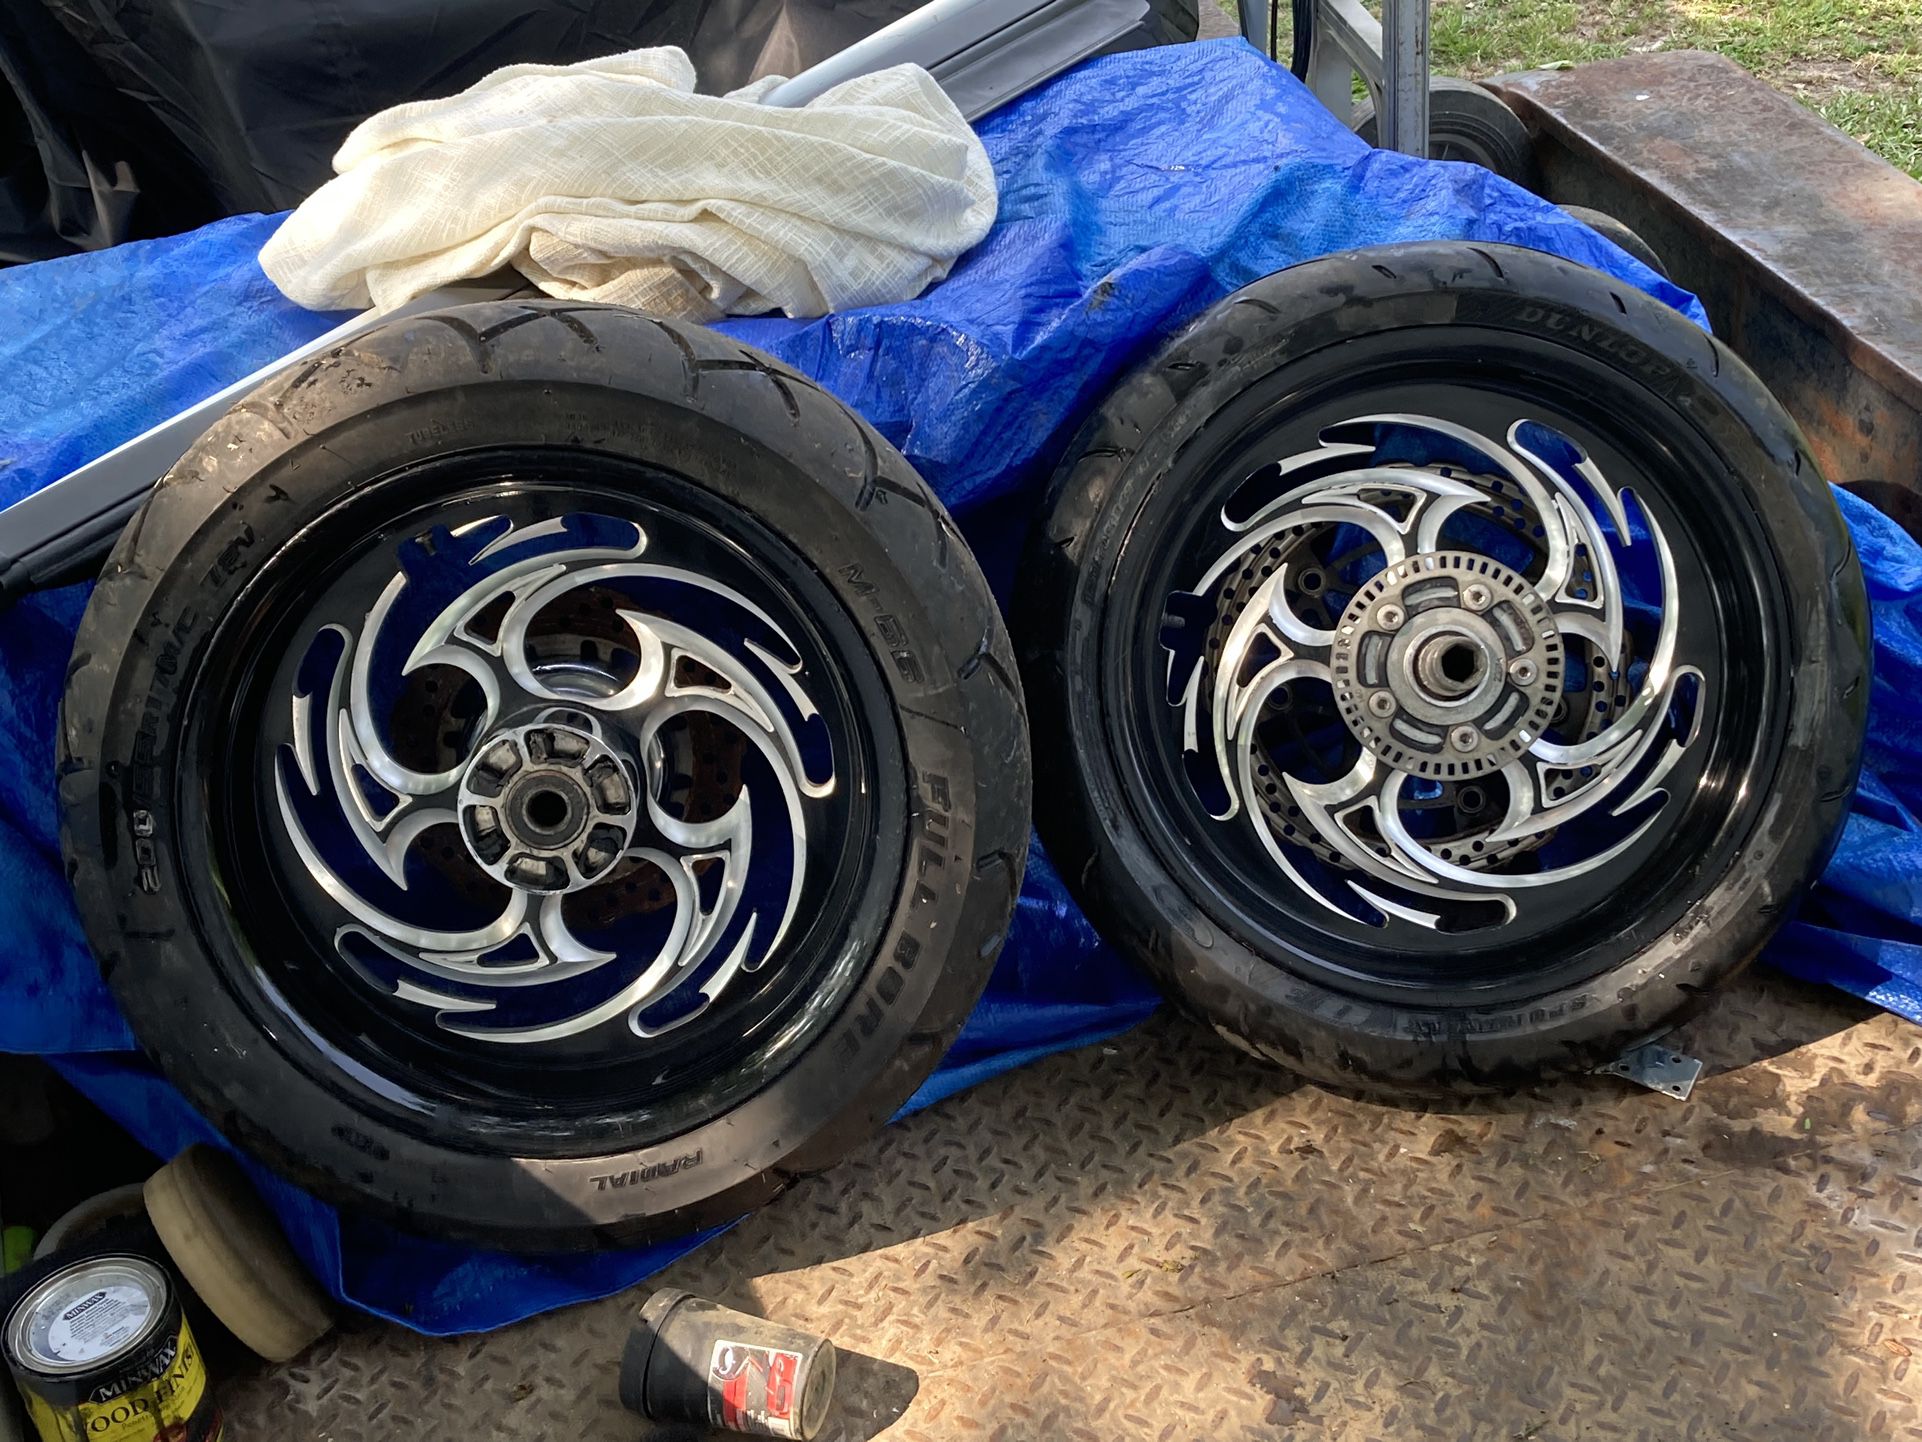 17”motorcycle (predator)Rims  And Tires   Come Off My 2012 Kawasaki 1400 R